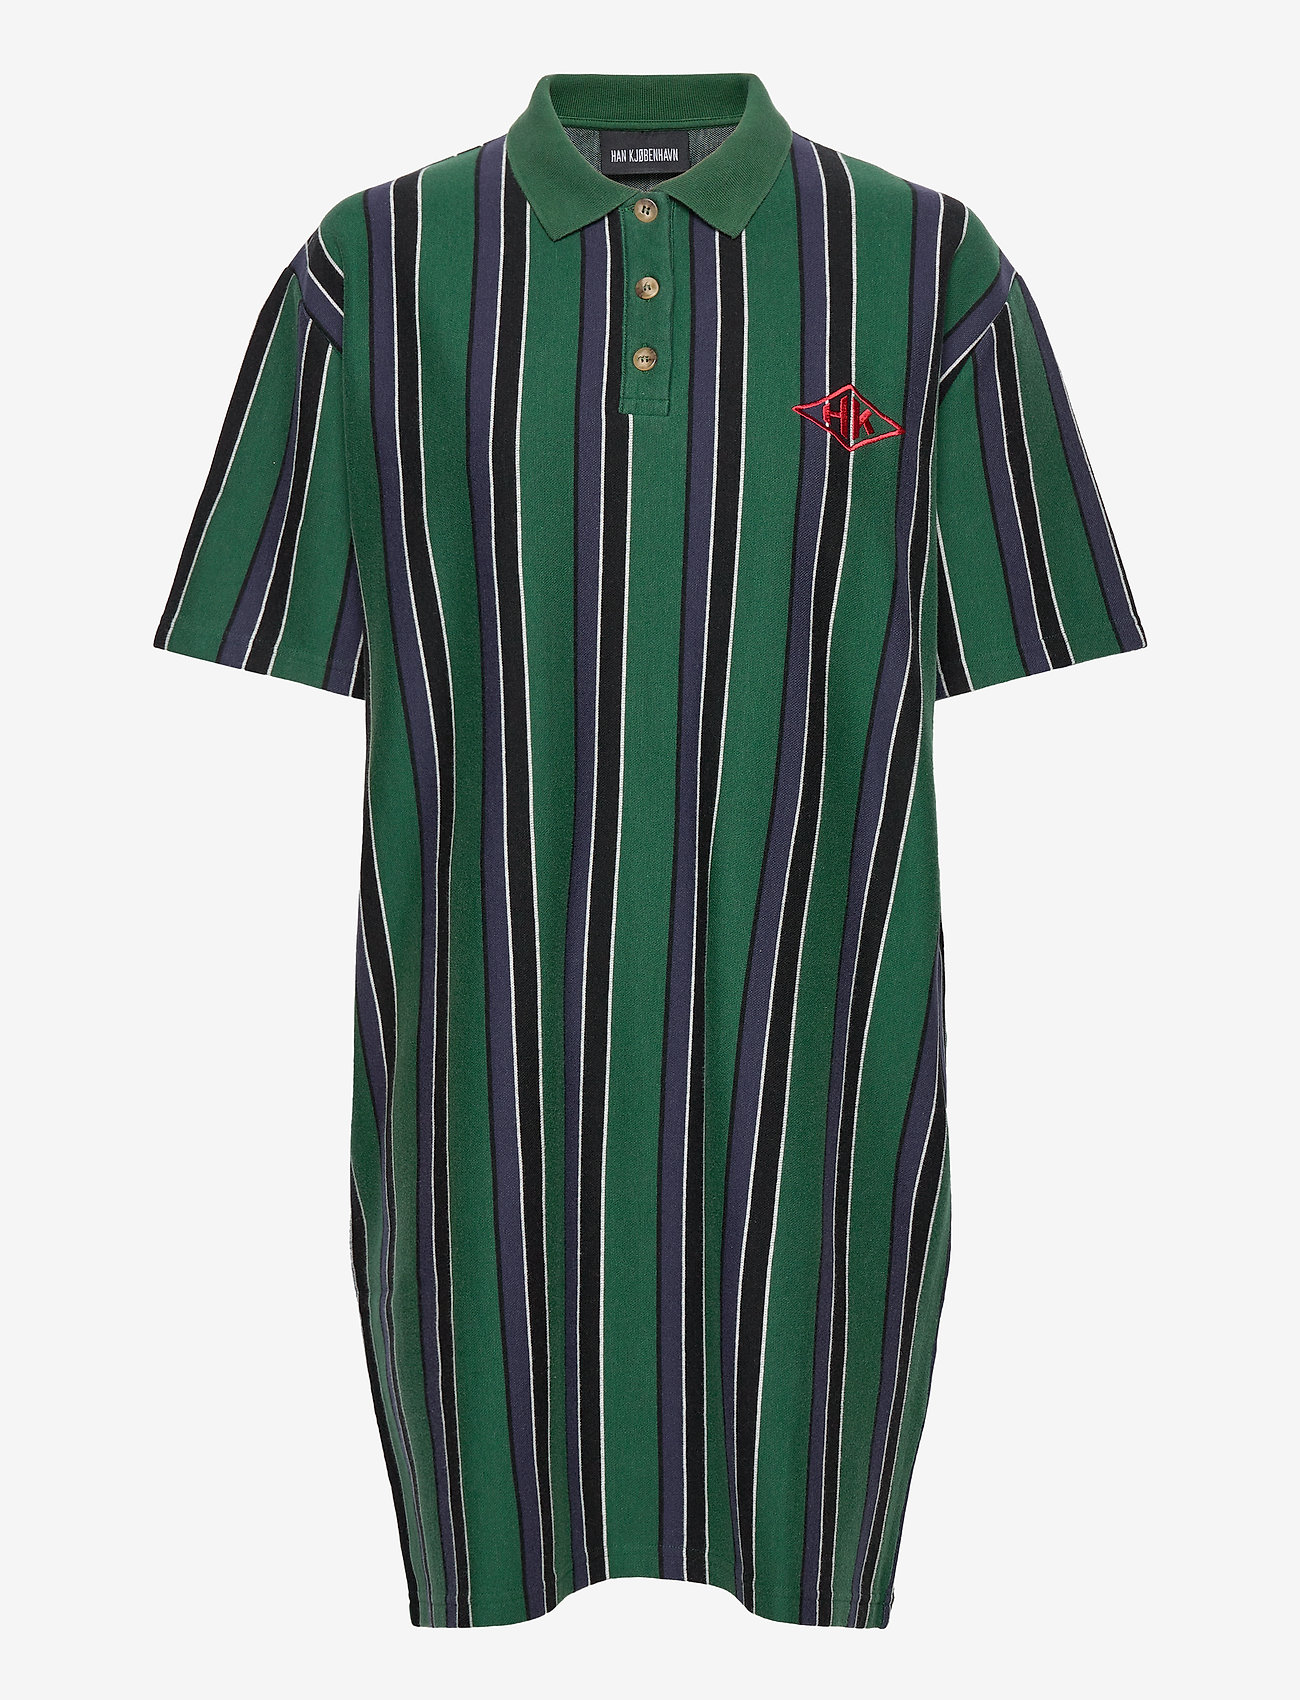 HAN Kjøbenhavn - Polo Dress - t-shirt dresses - faded green - 0